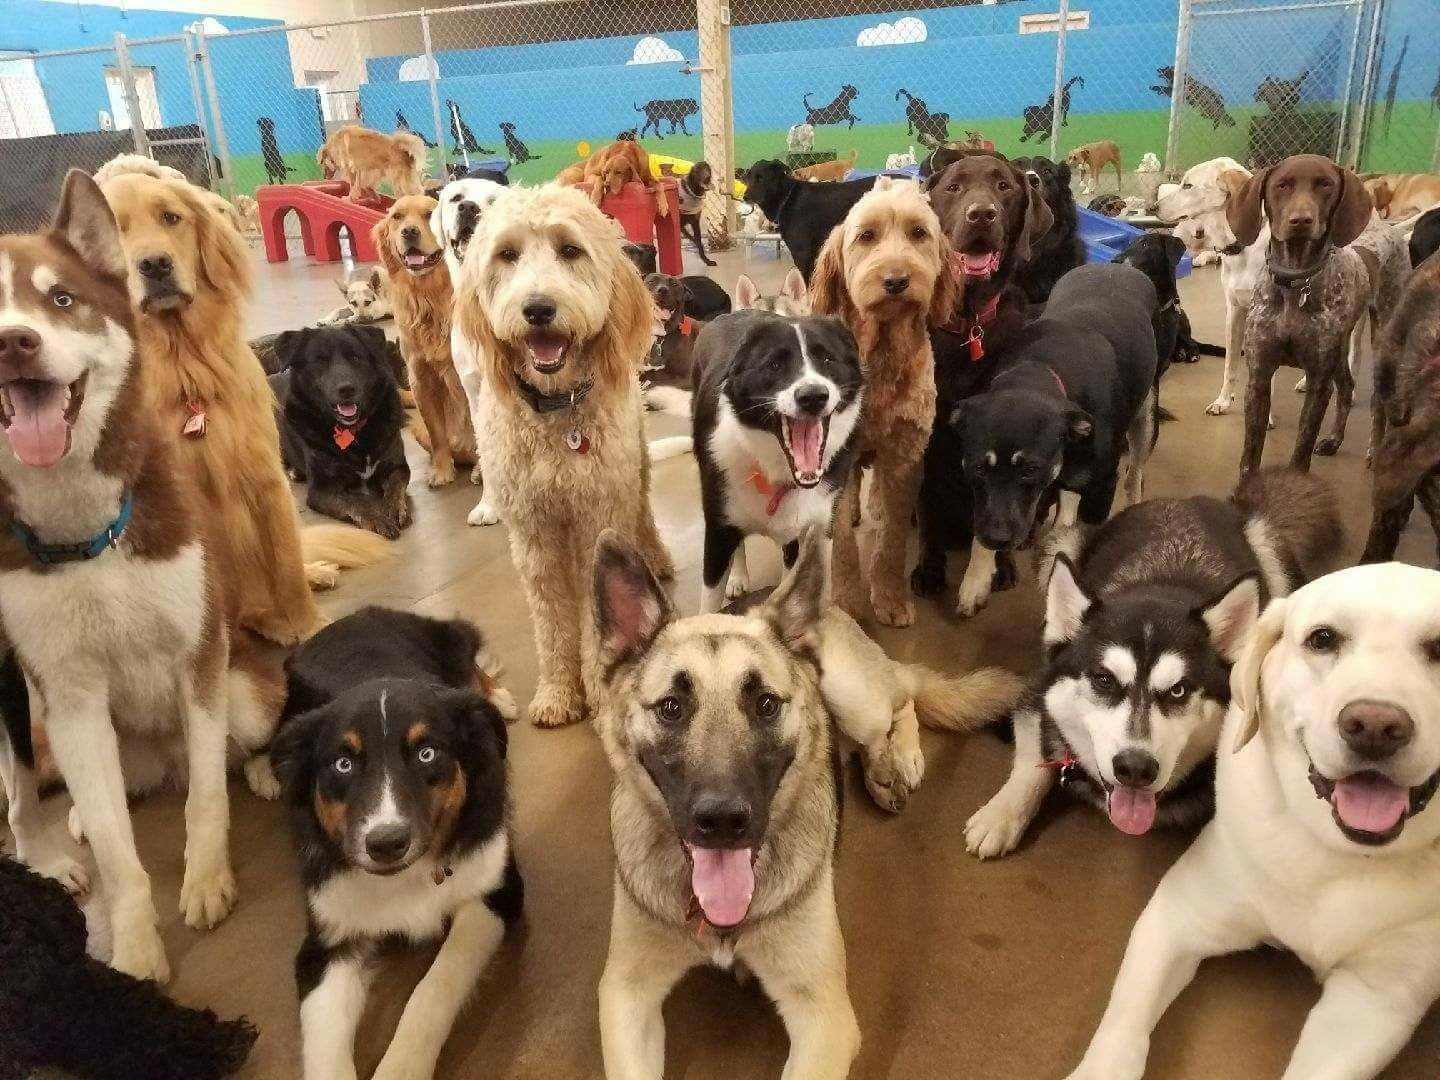 Lucky Dog Pet Lodge